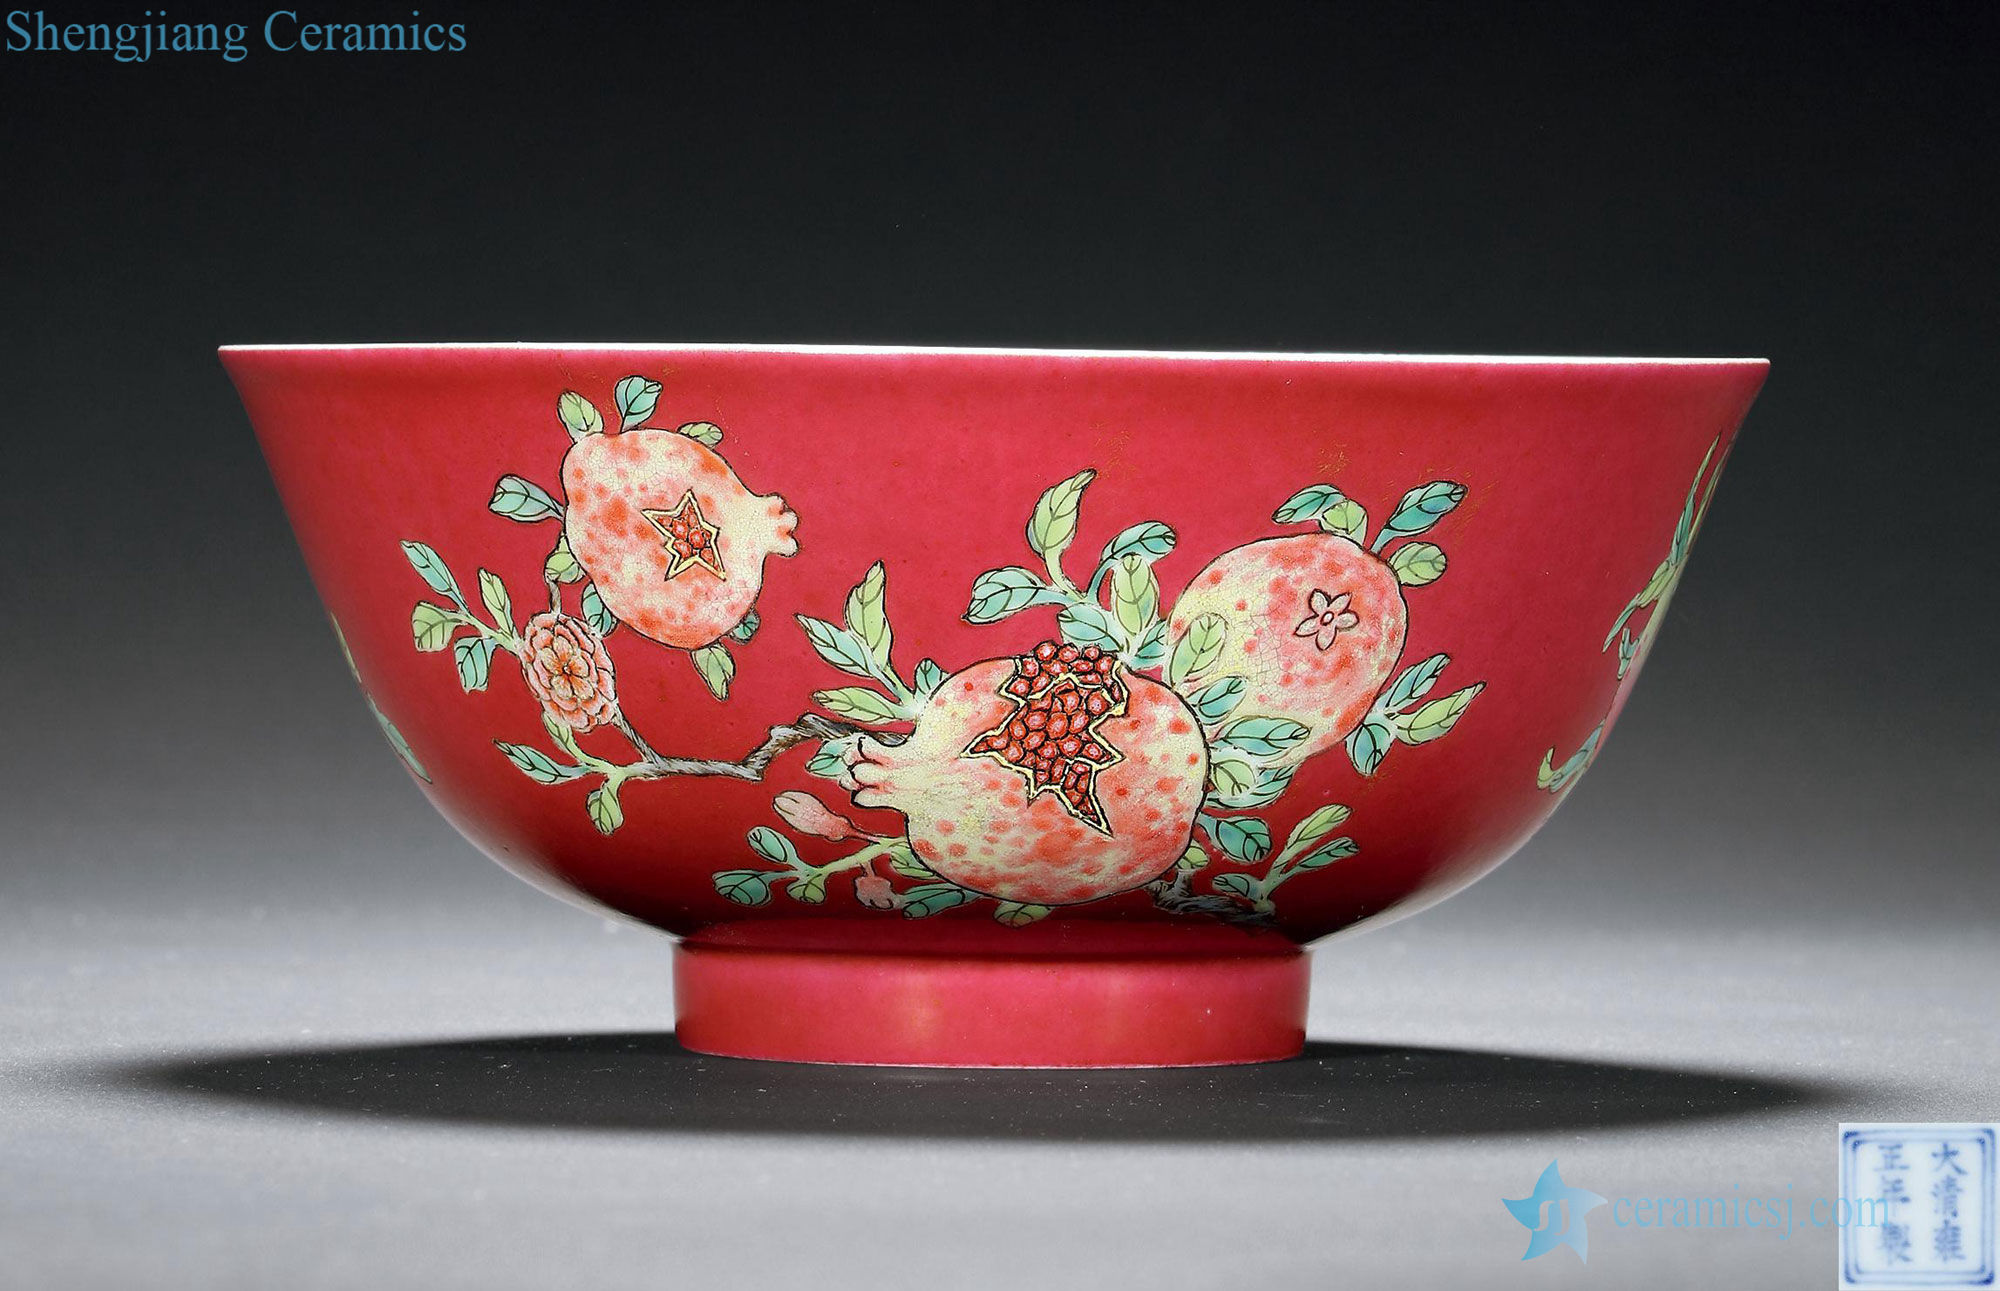 Qing porcelain body plus the sanduo bowl